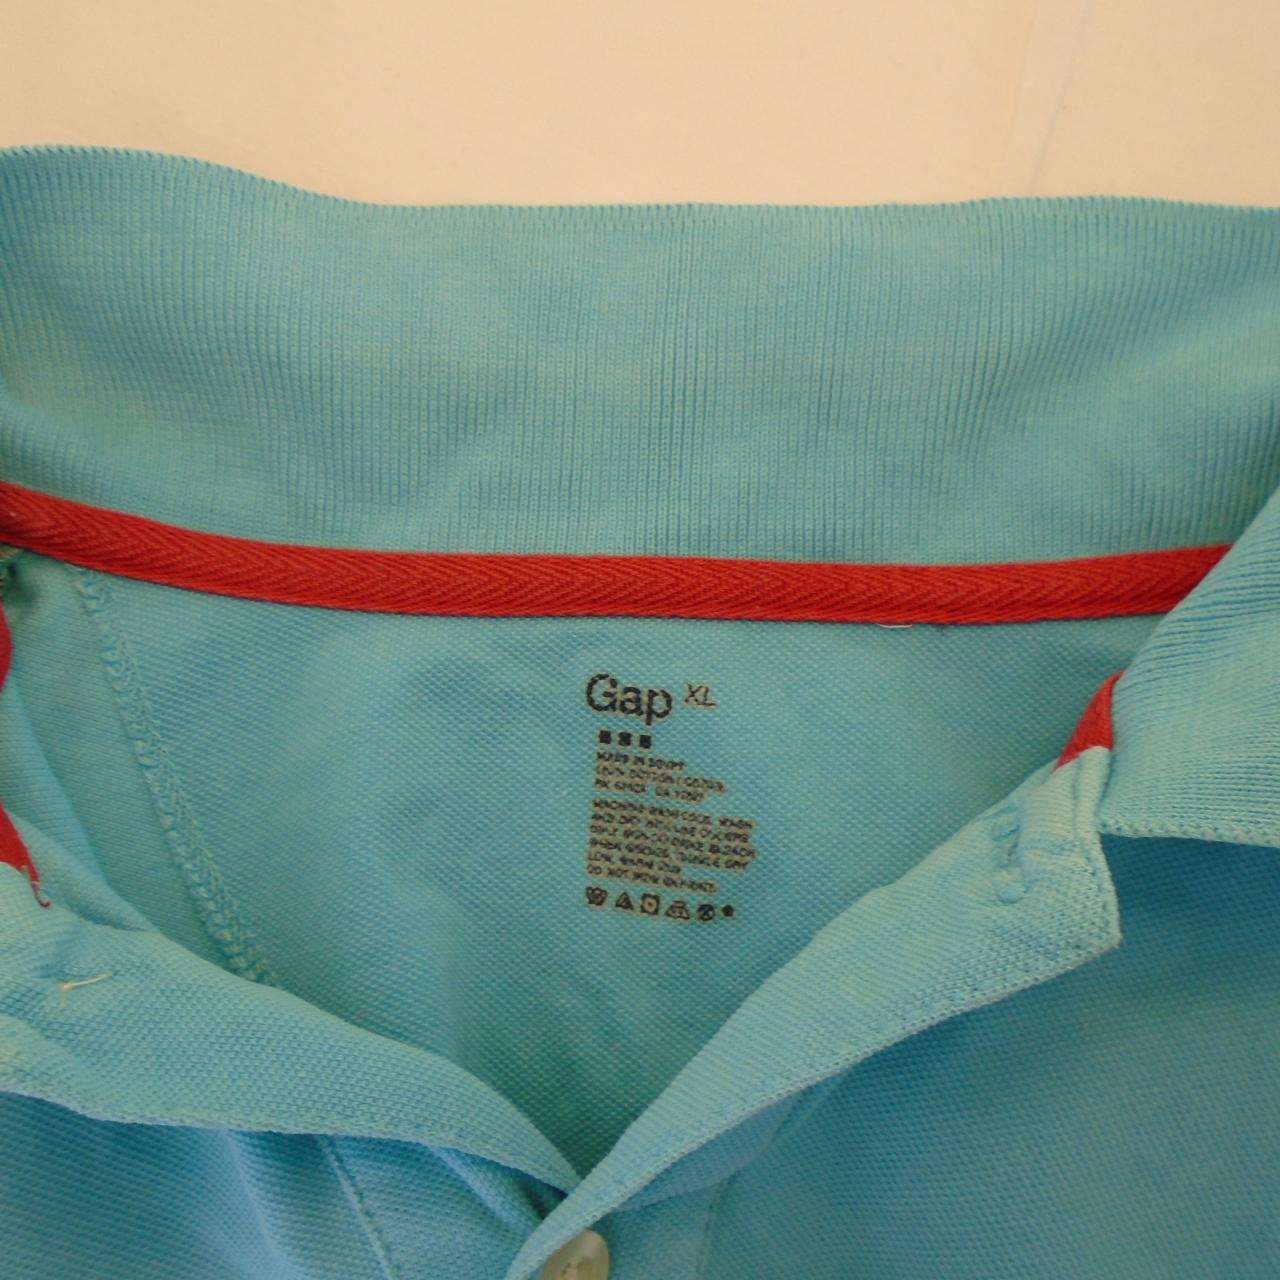 Men's Polo GAP. Blue. XL. Used. Good